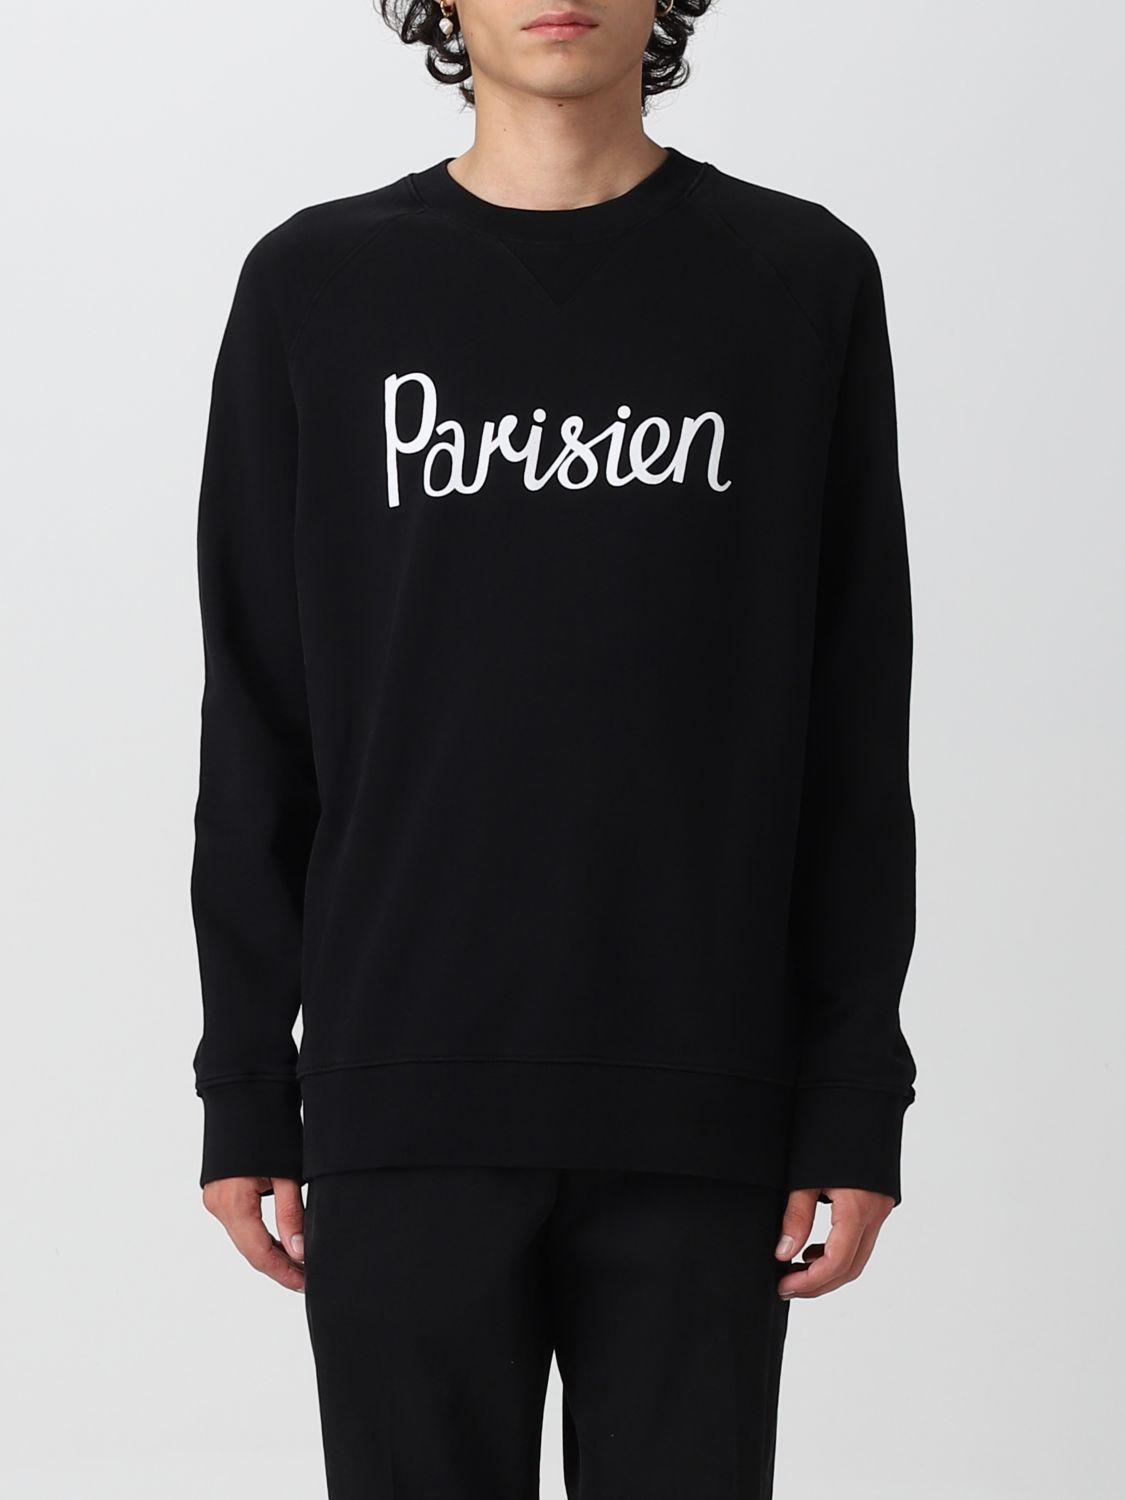 Maison Kitsuné Black Cotton Sweatshirt for Men Mens Clothing Activewear Save 8% gym and workout clothes Hoodies 